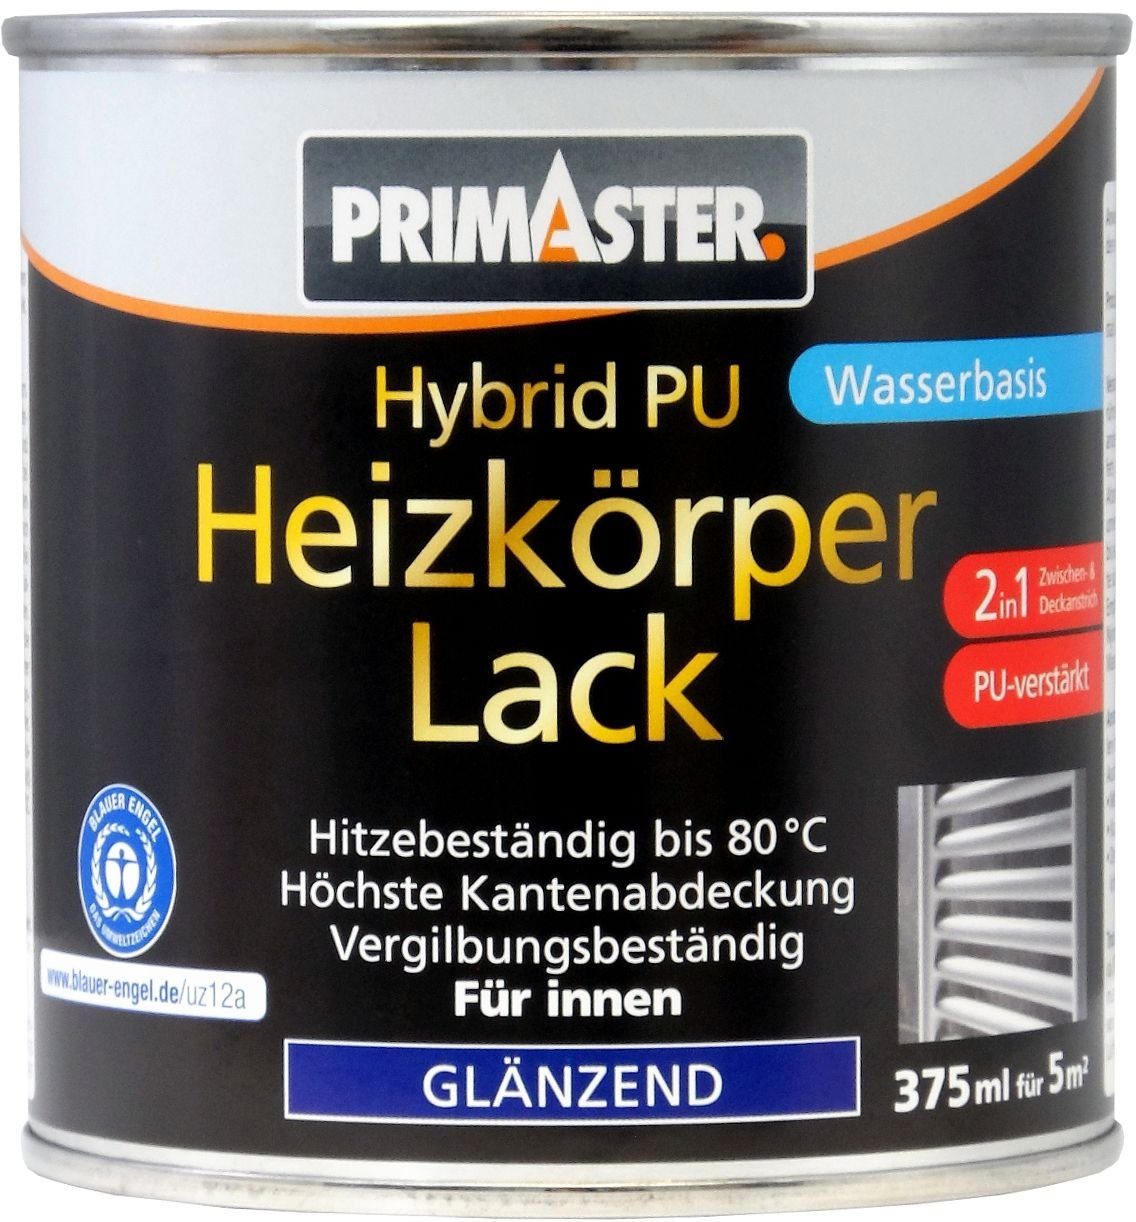 Heizkörperlack Primaster ml Primaster Hybrid-PU 375 weiß Heizkörperlack